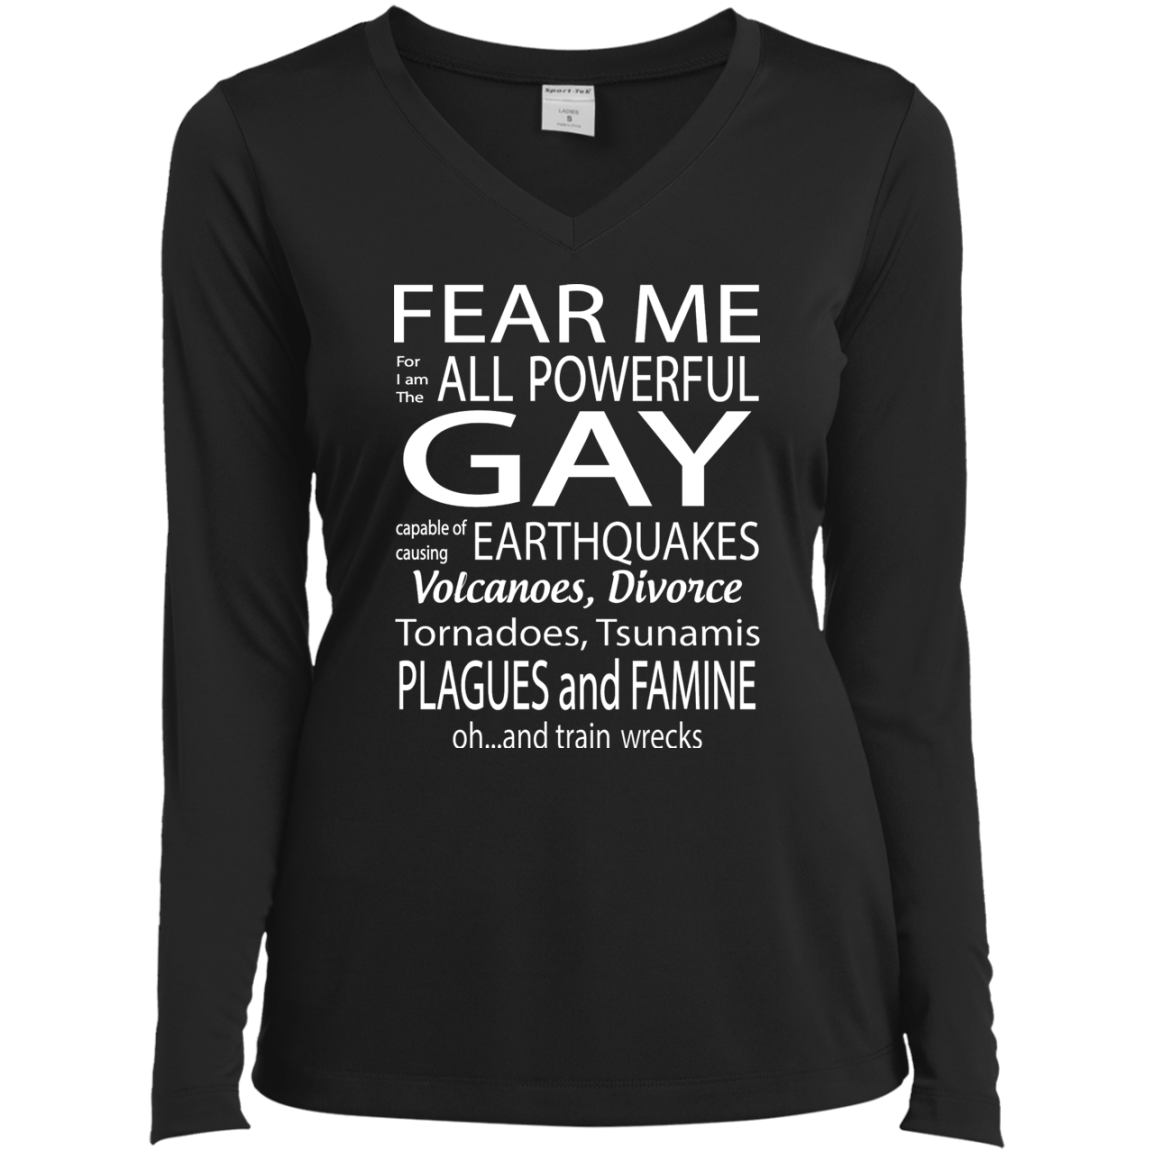 Powerfull gay Gay pride black round neck tshirt for men | full sleeves tshirt | v-neck tshirt for men